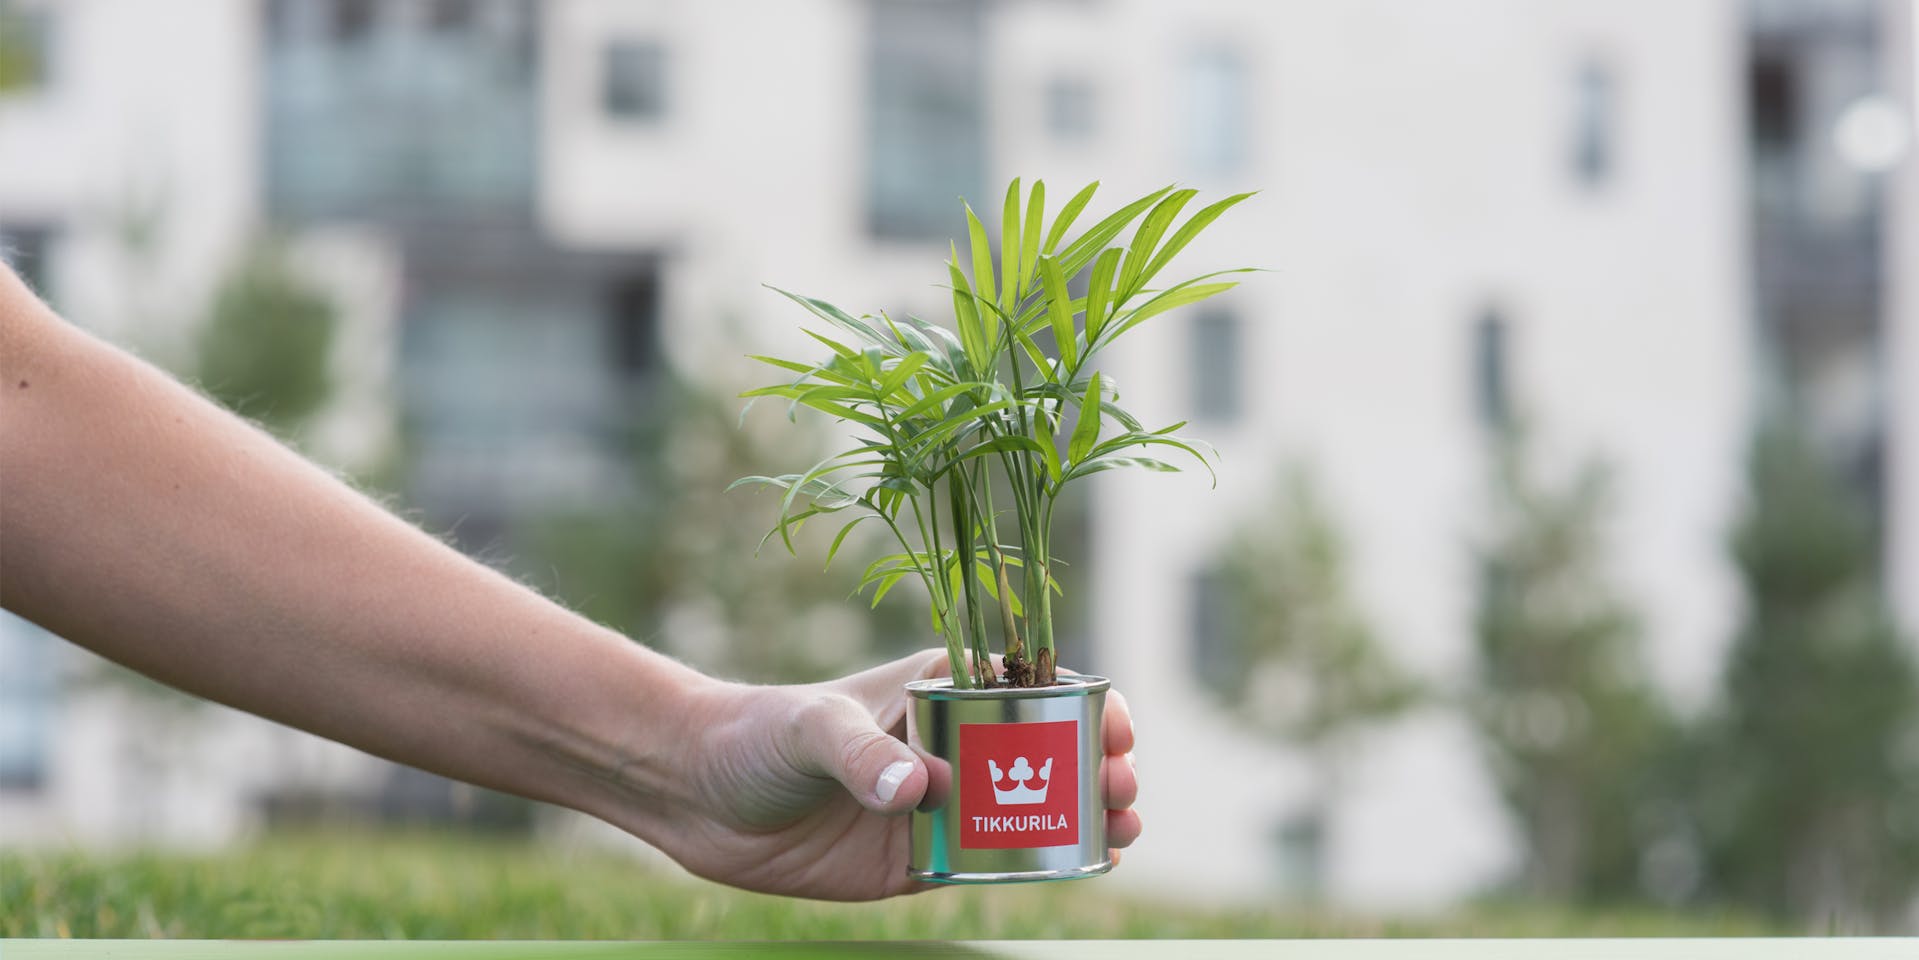 Tikkurila plant pot in hand - hero banner image